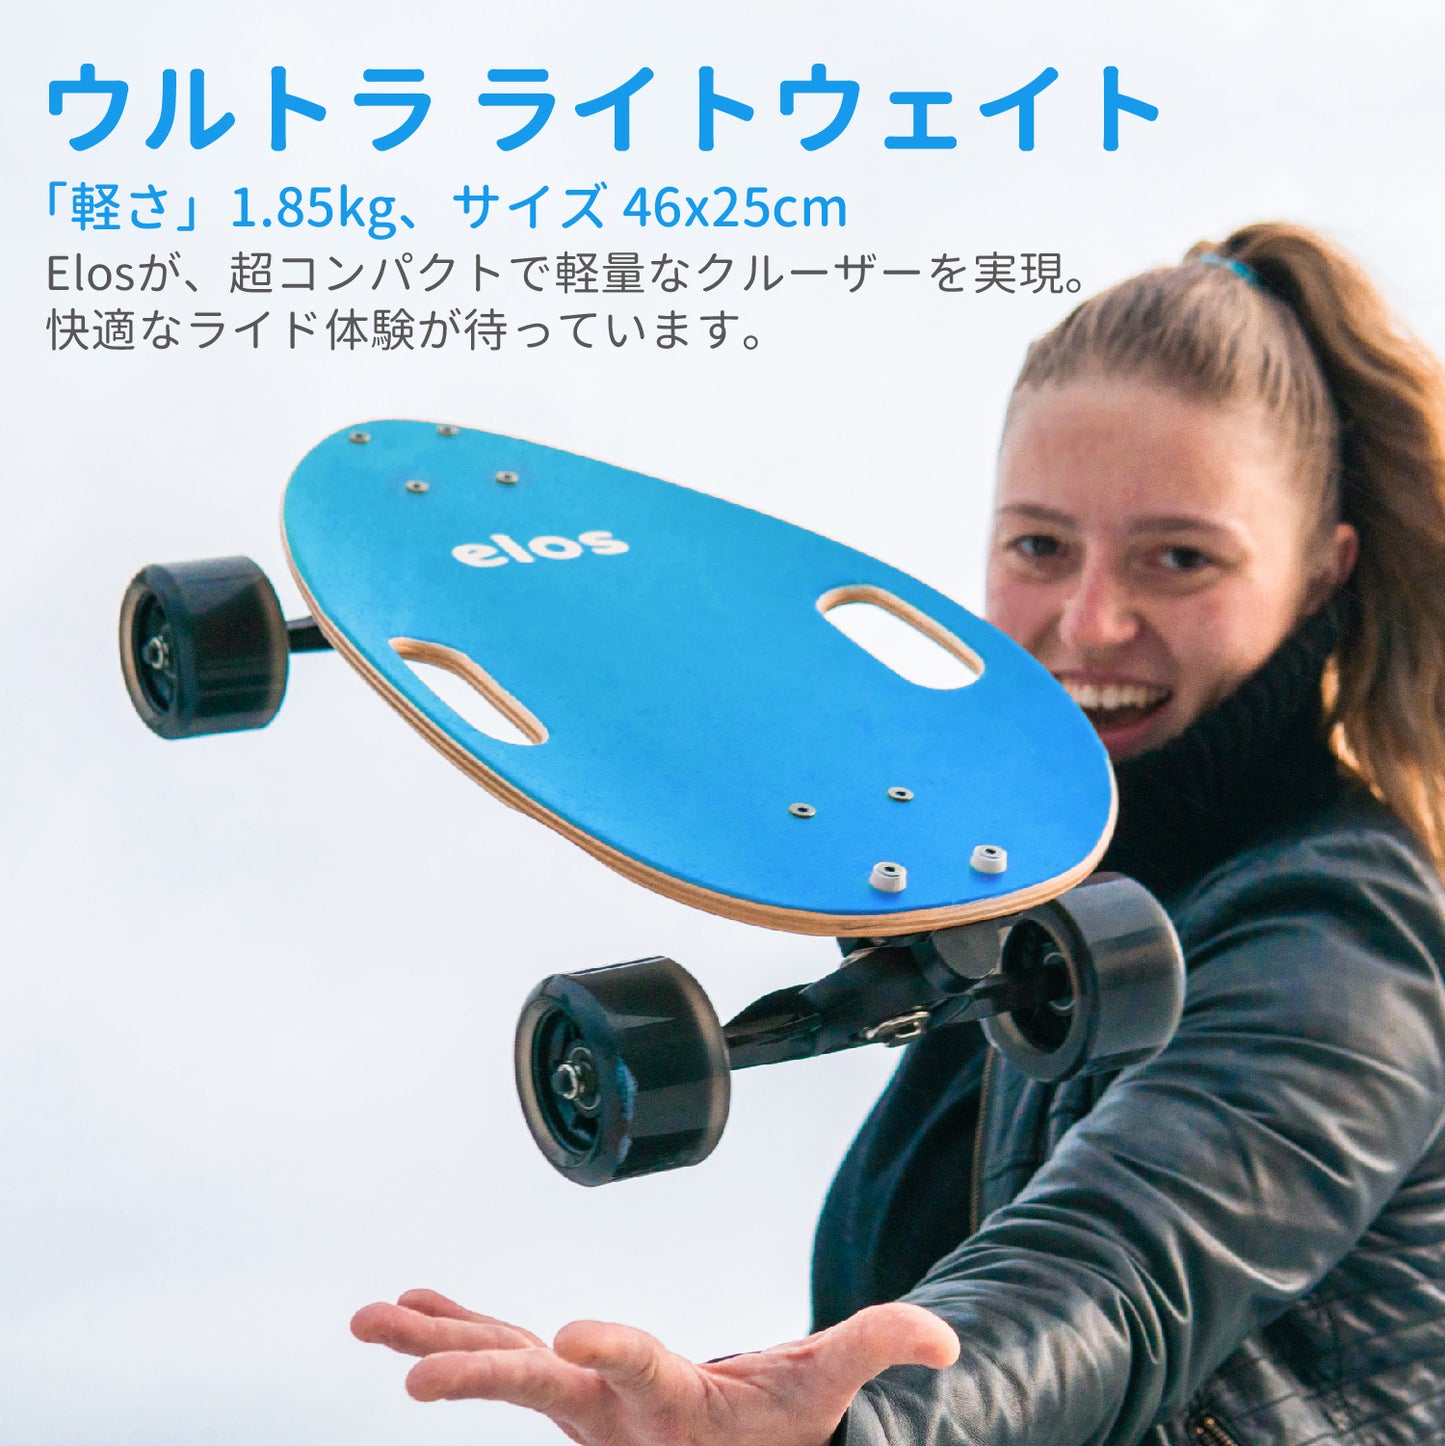 Complete Skateboard - Elos Blue | Elosブルー（バッグ付き）